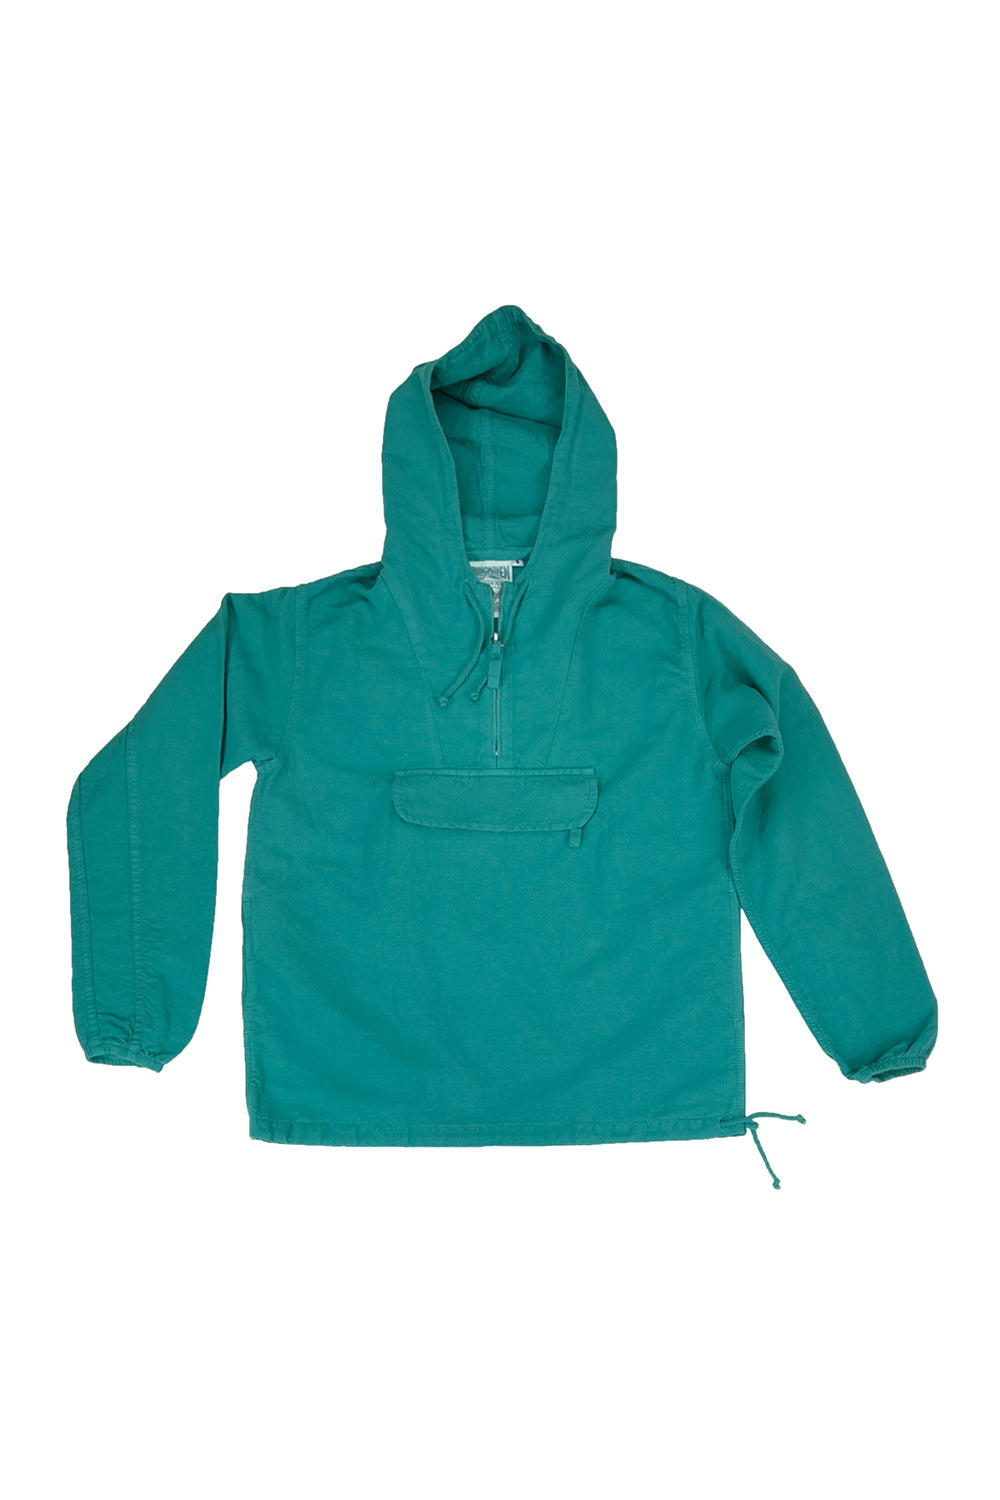 Shoreline Anorak Jacket - Sale Colors | Jungmaven Hemp Clothing & Accessories / Color: Ivy Green